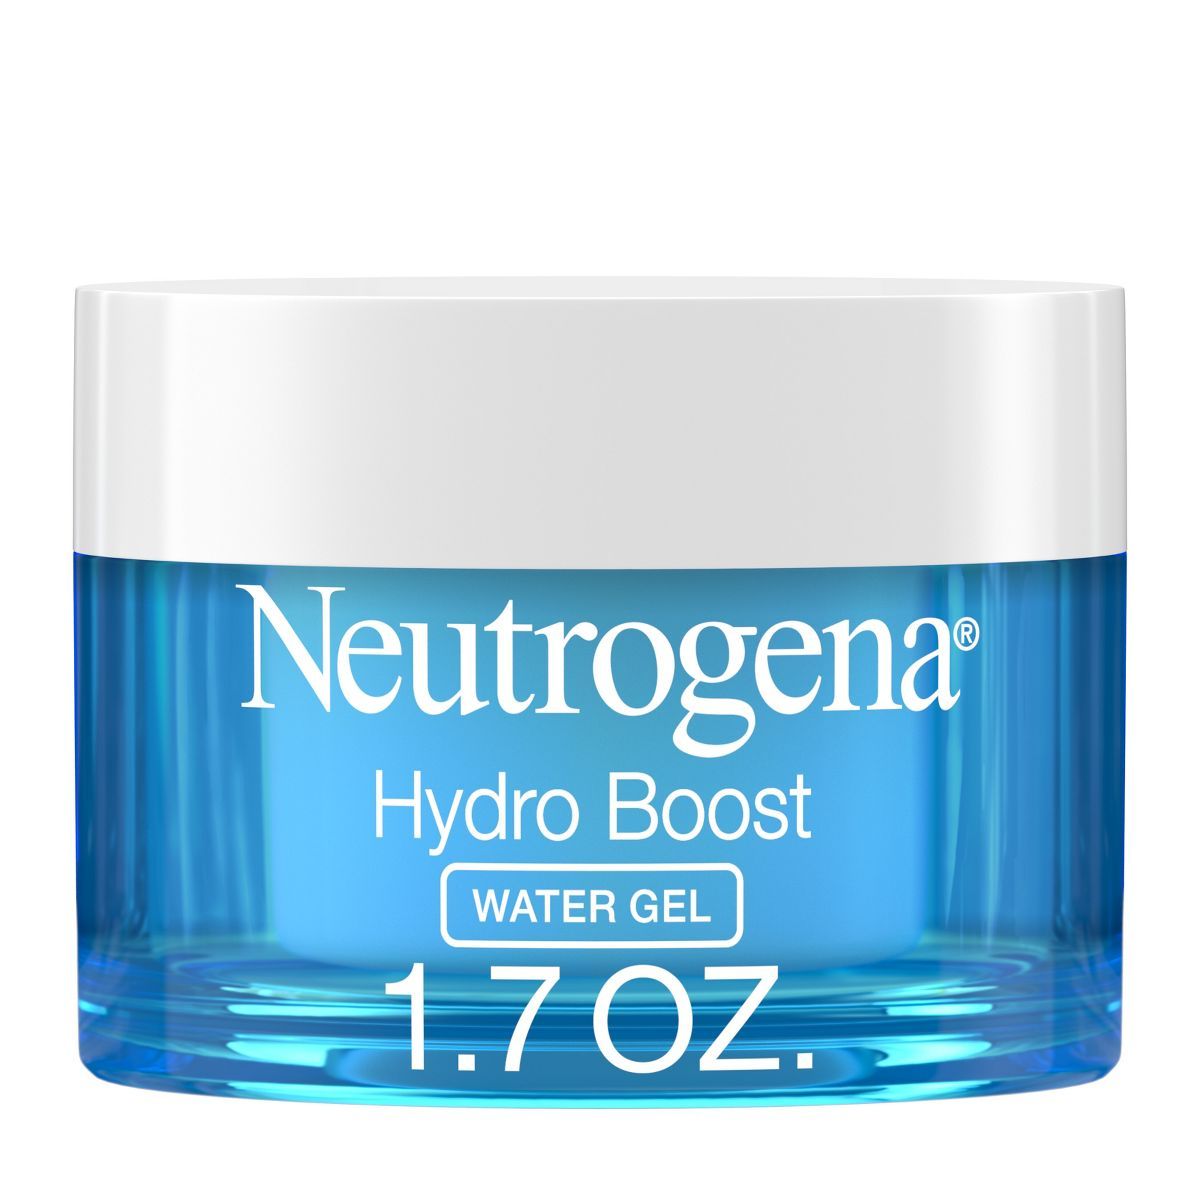 Neutrogena Hydroboost Moisturizer with Hyaluronic Acid - 1.7oz | Target